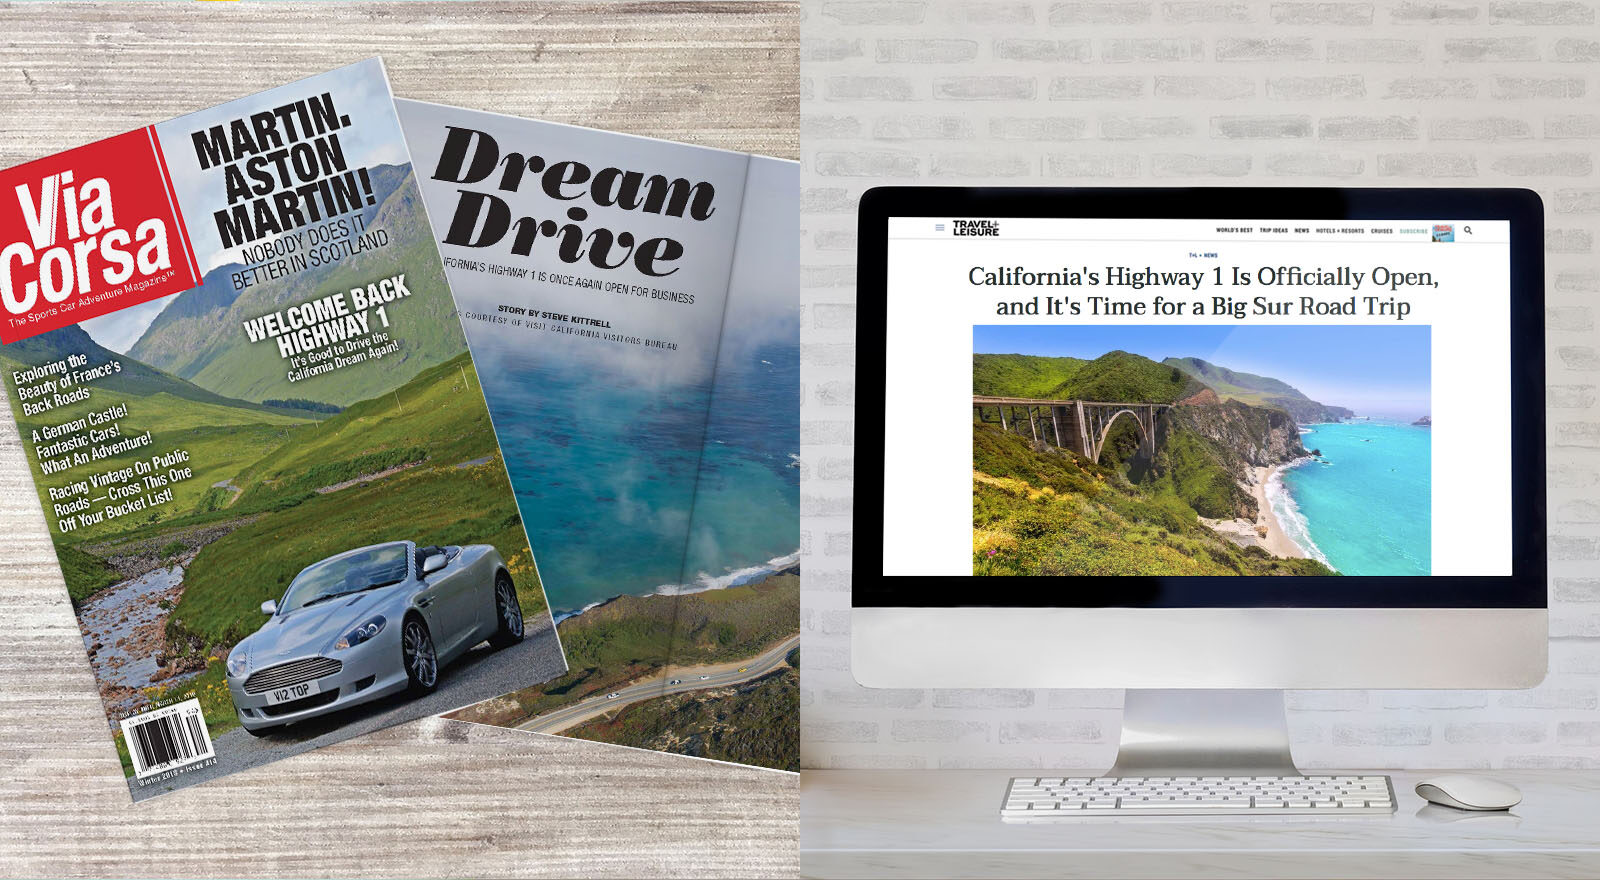 Dream Drive Magazine and Laptop